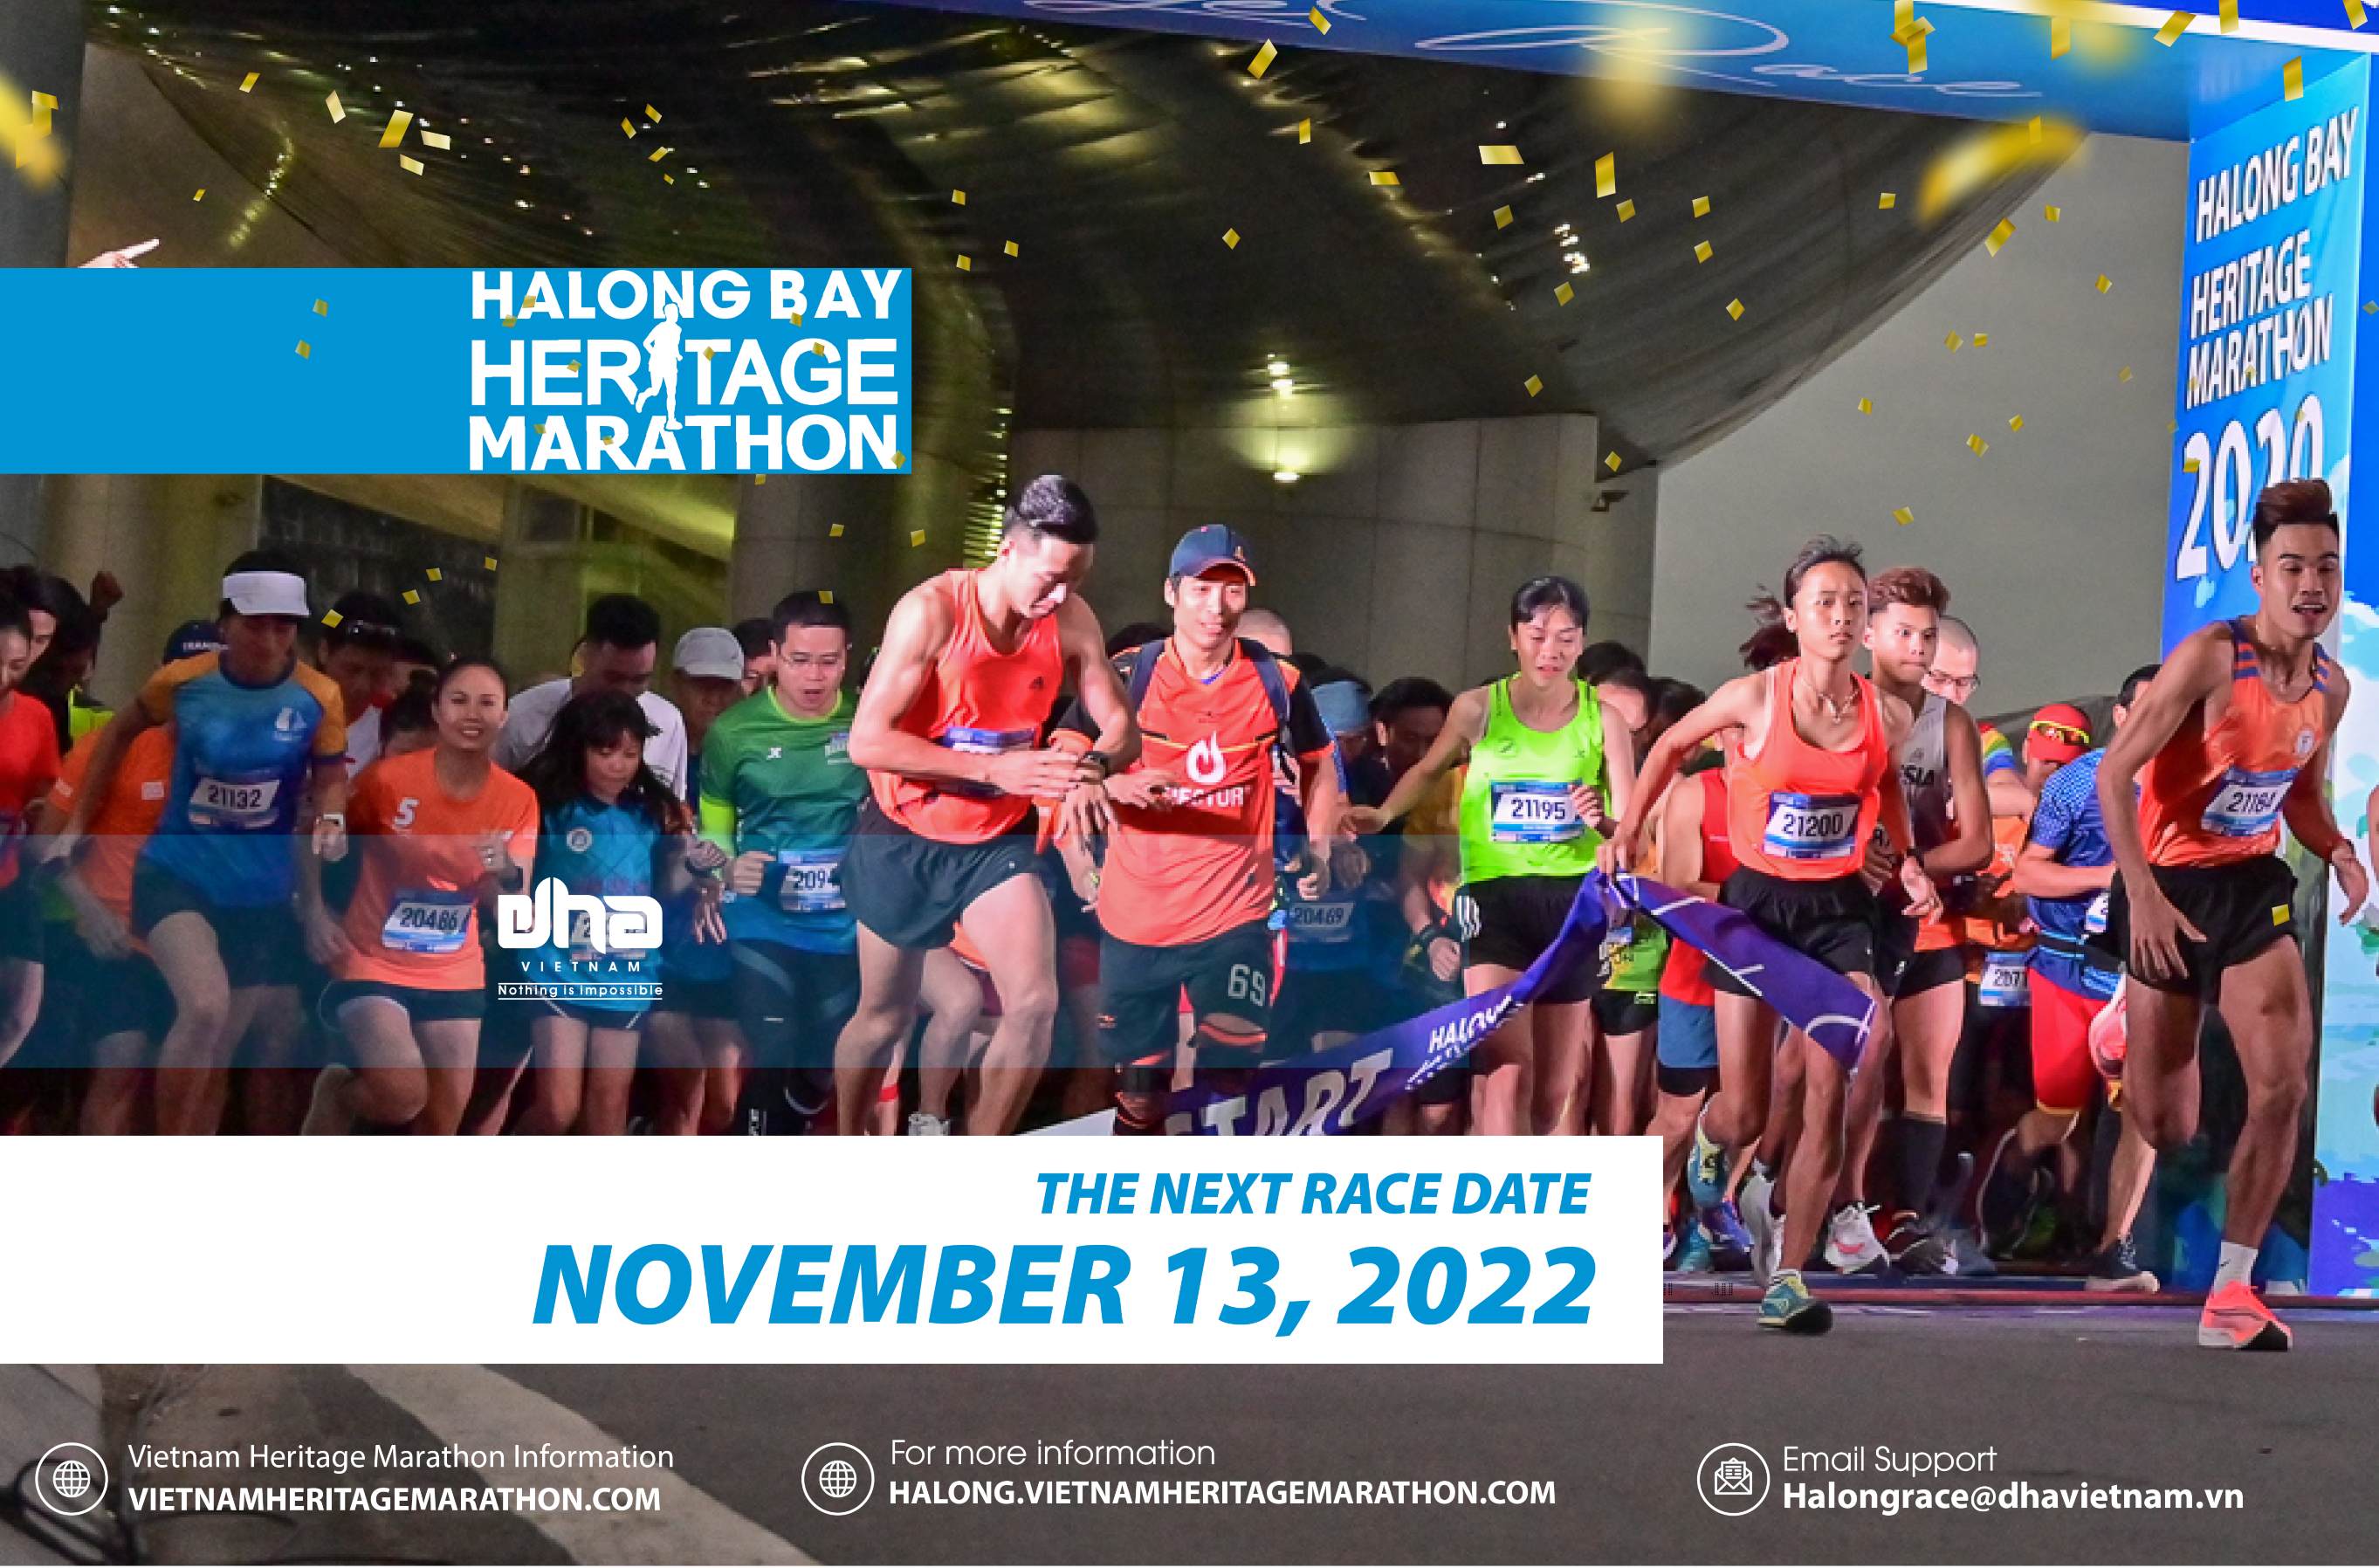 Halong Bay Heritage Marathon 2022 Finalizes Race Date Nov 13